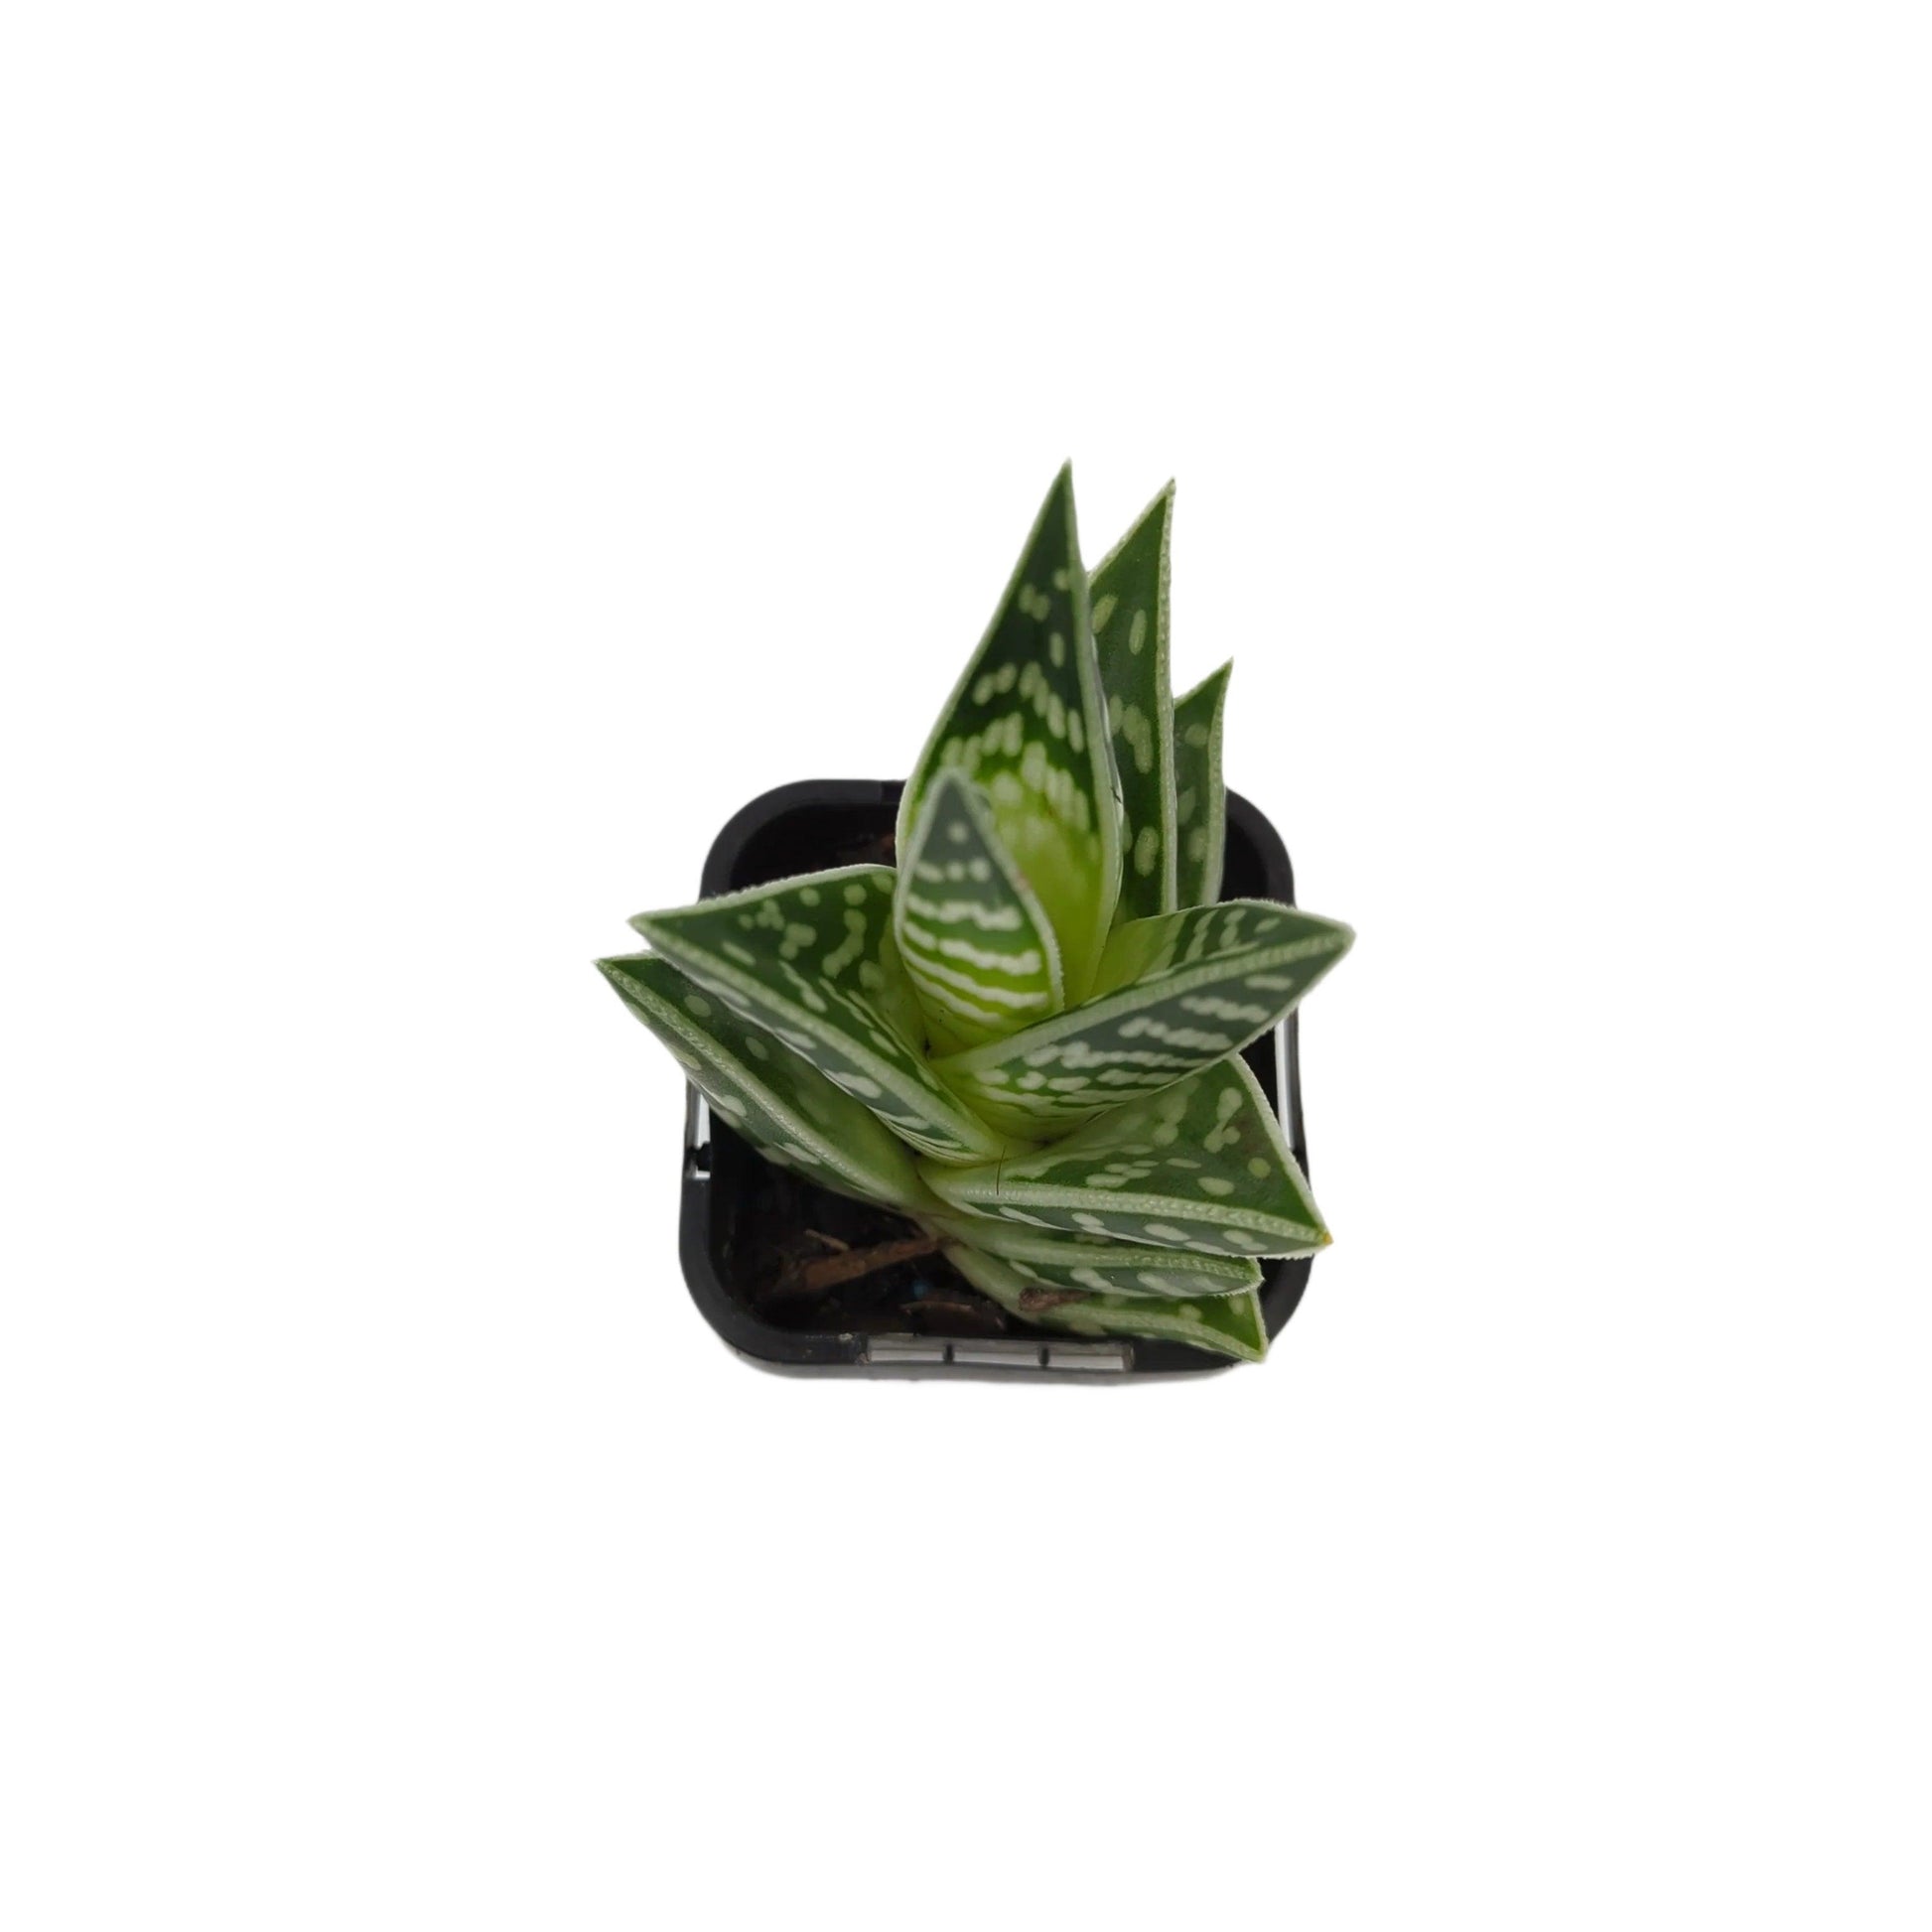 Aloe - Gator - The Plant Buddies